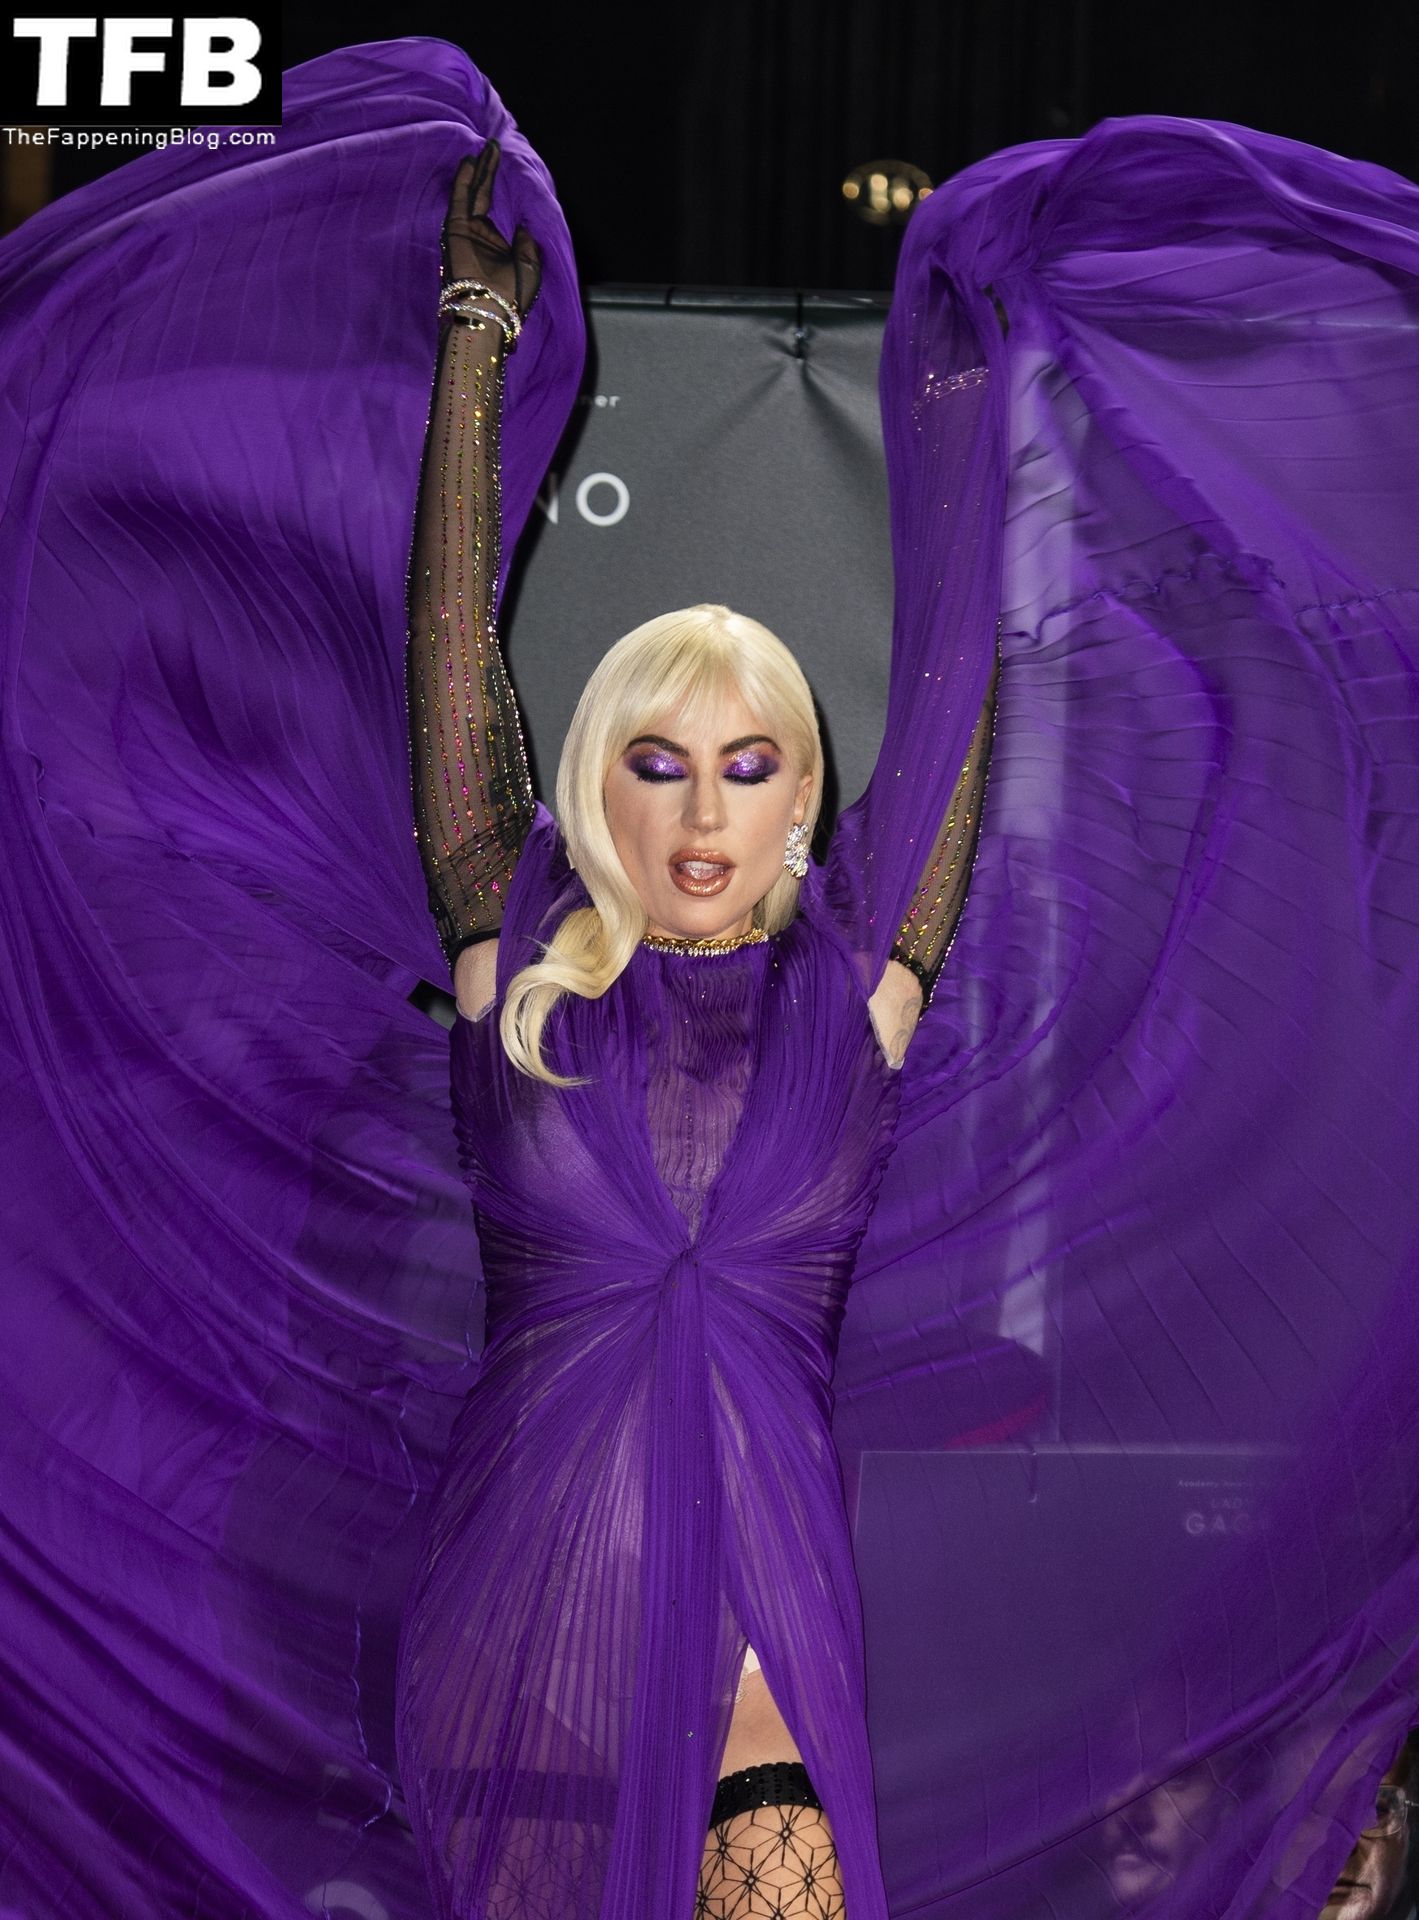 Lady-Gaga-Sexy-The-Fappening-Blog-32.jpg